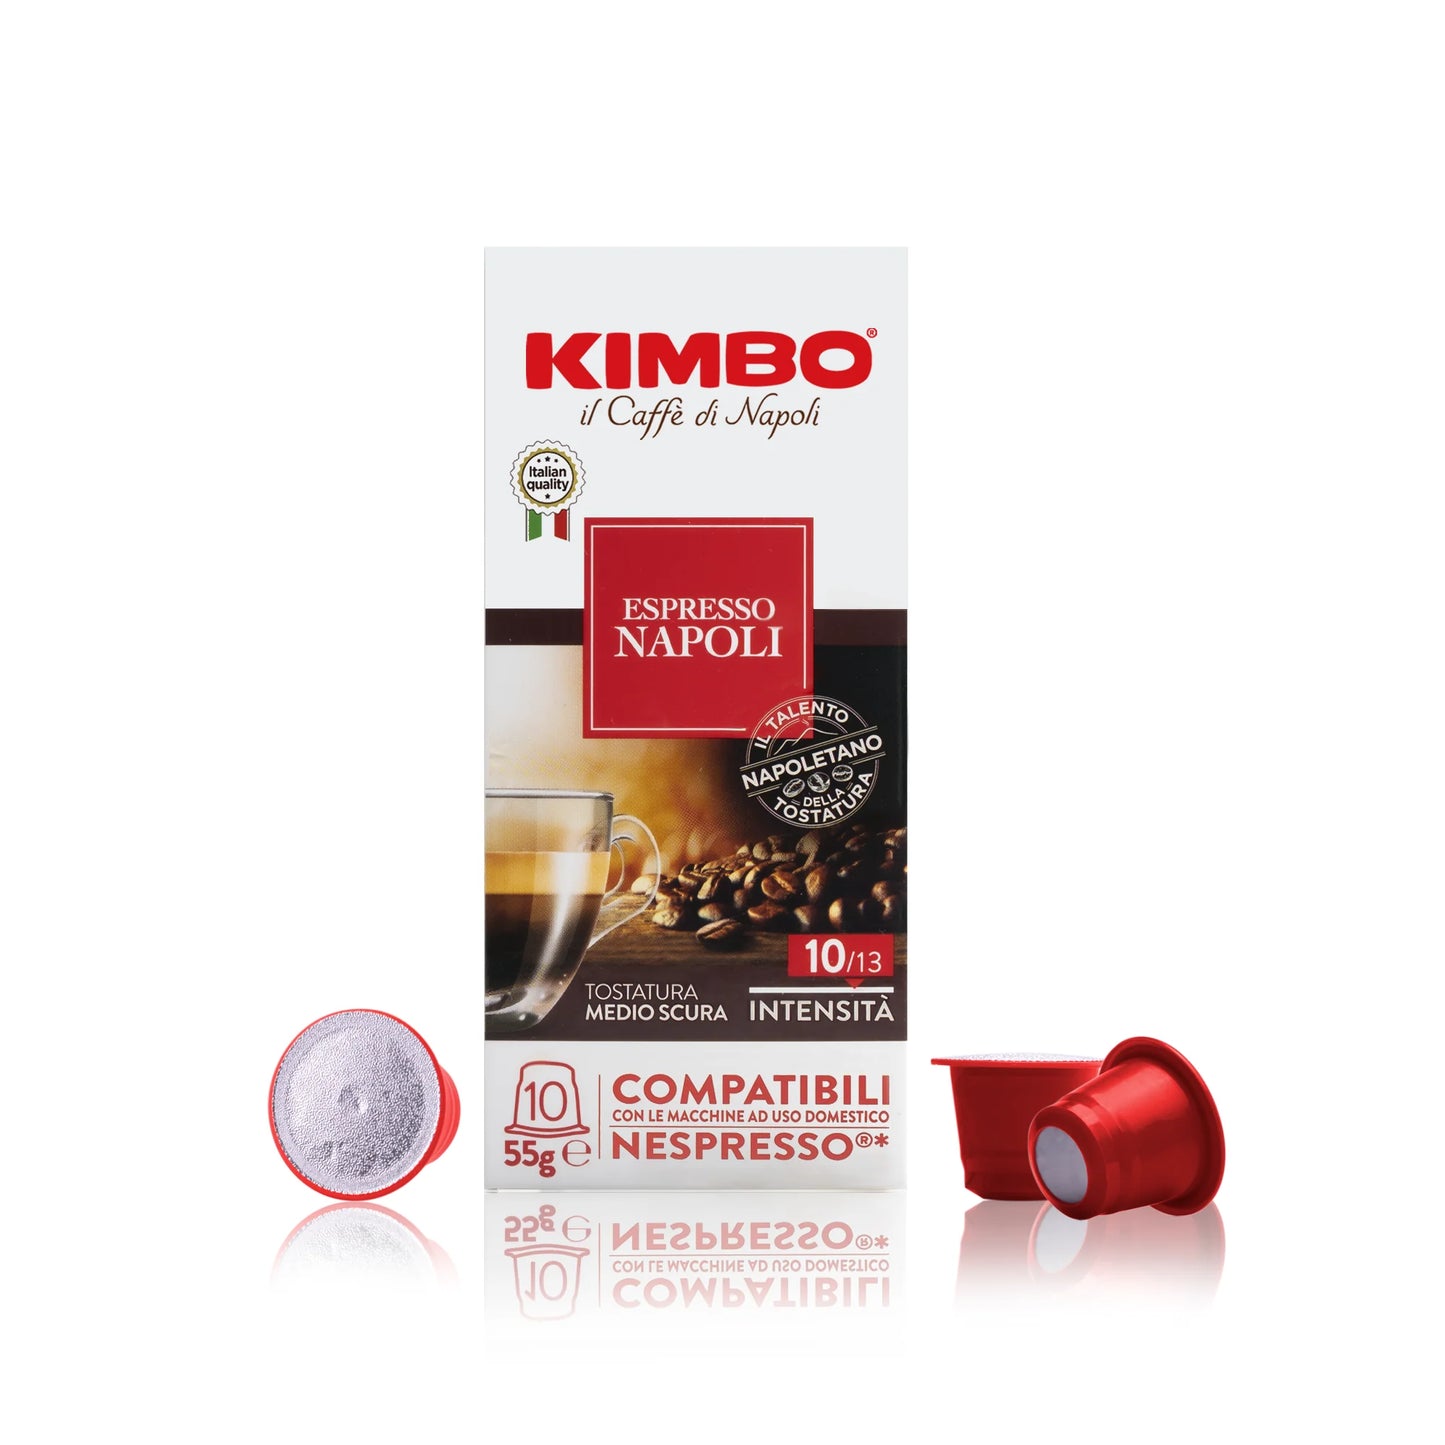 10 cápsulas compatibles *NESPRESSO Espresso Napoli Kimbo